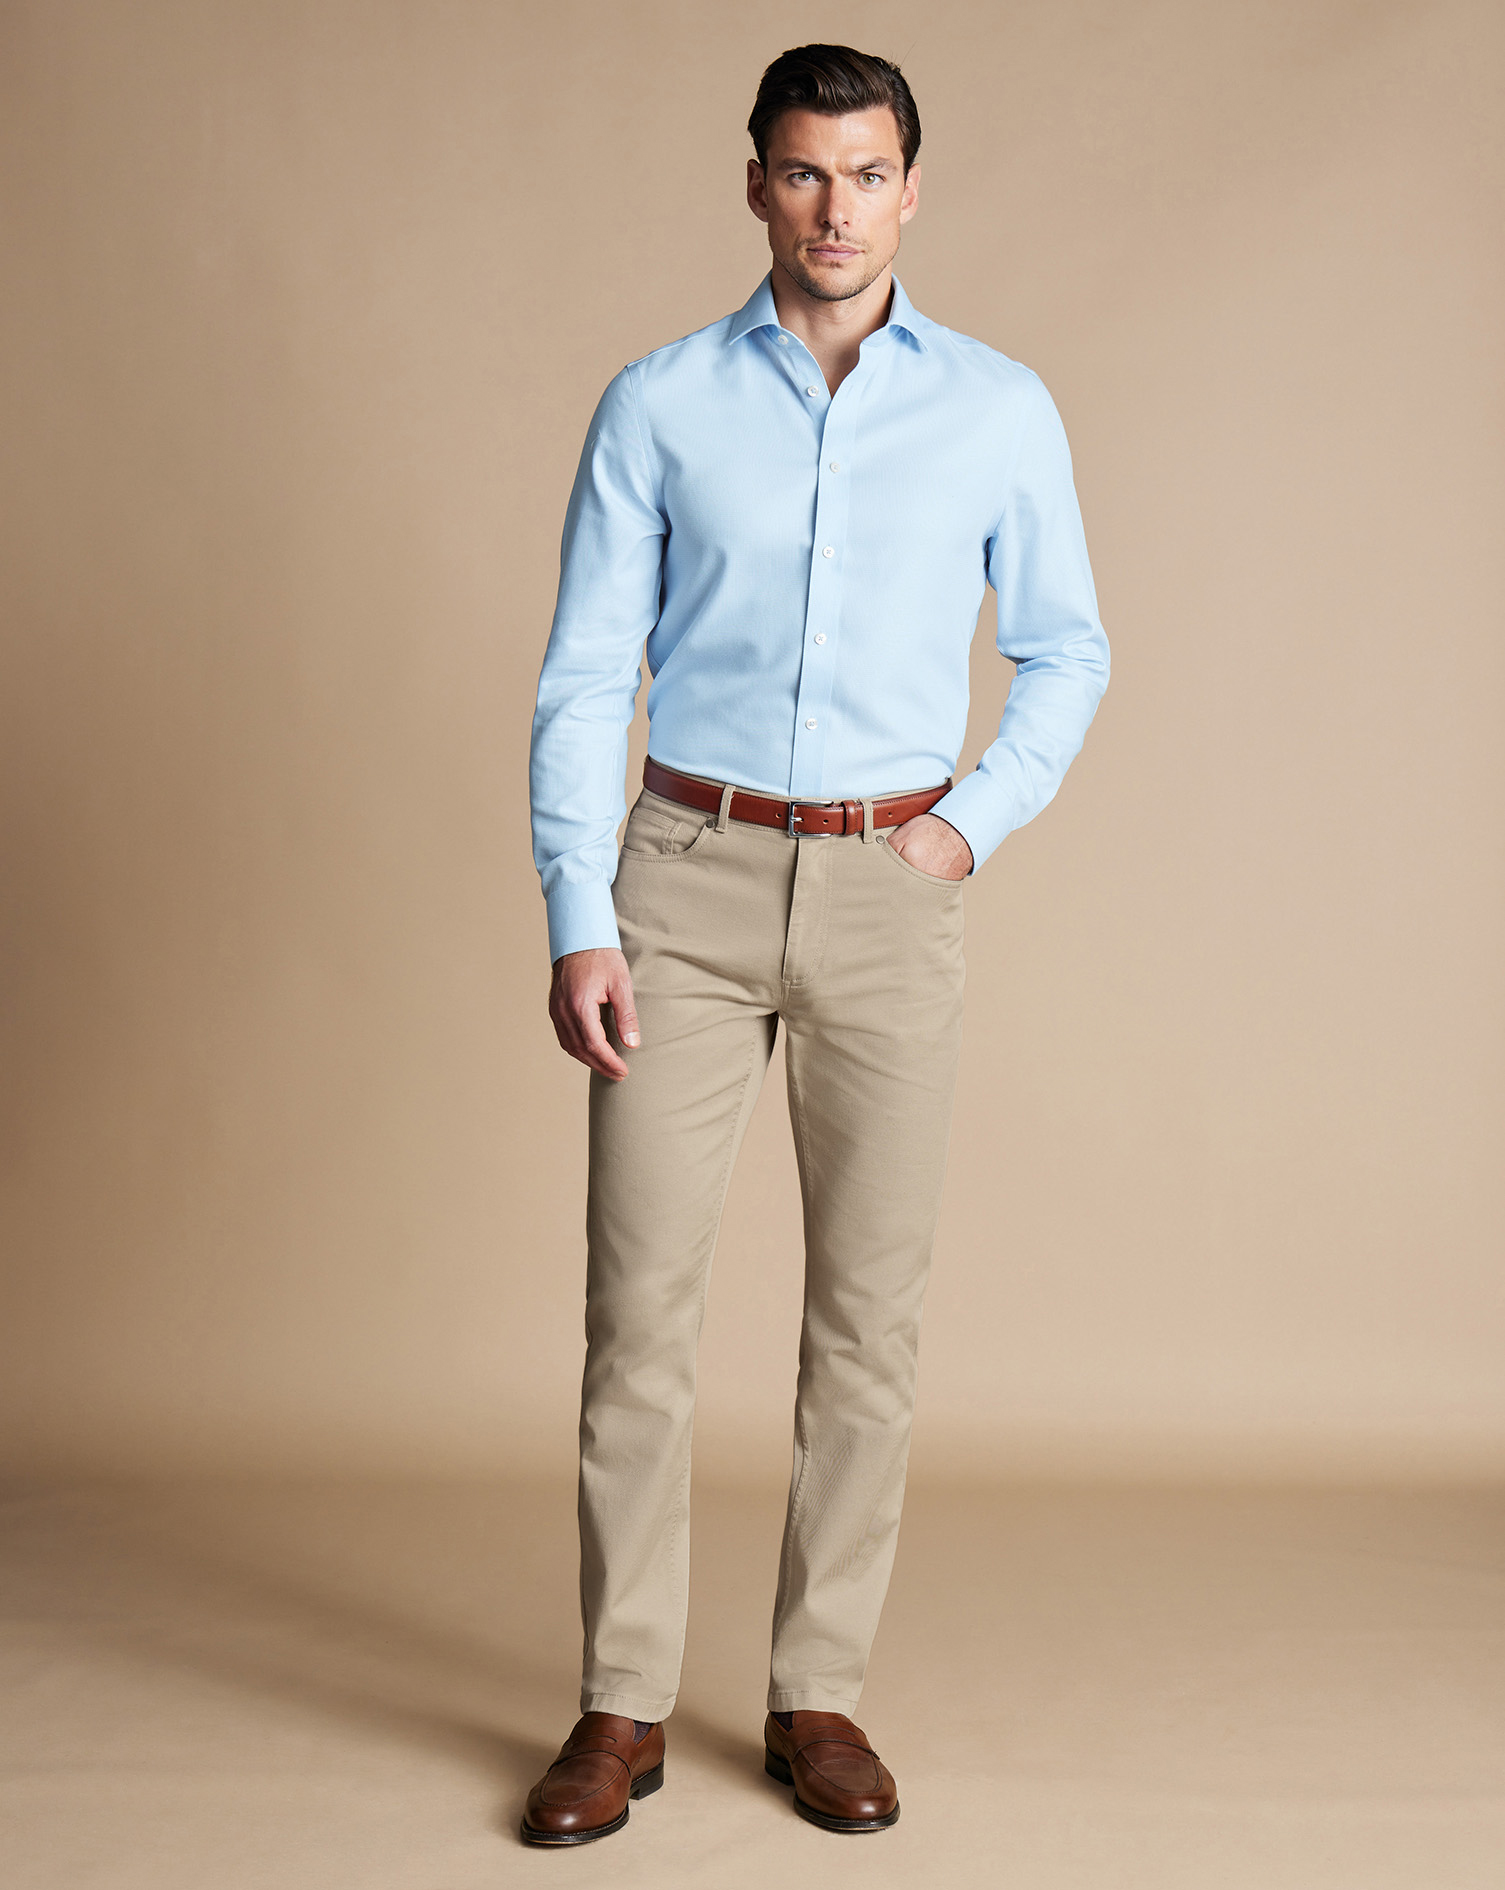 Men's Charles Tyrwhitt Twill 5 Pocket Jeans - Stone Neutral Size W34 L30 Cotton
